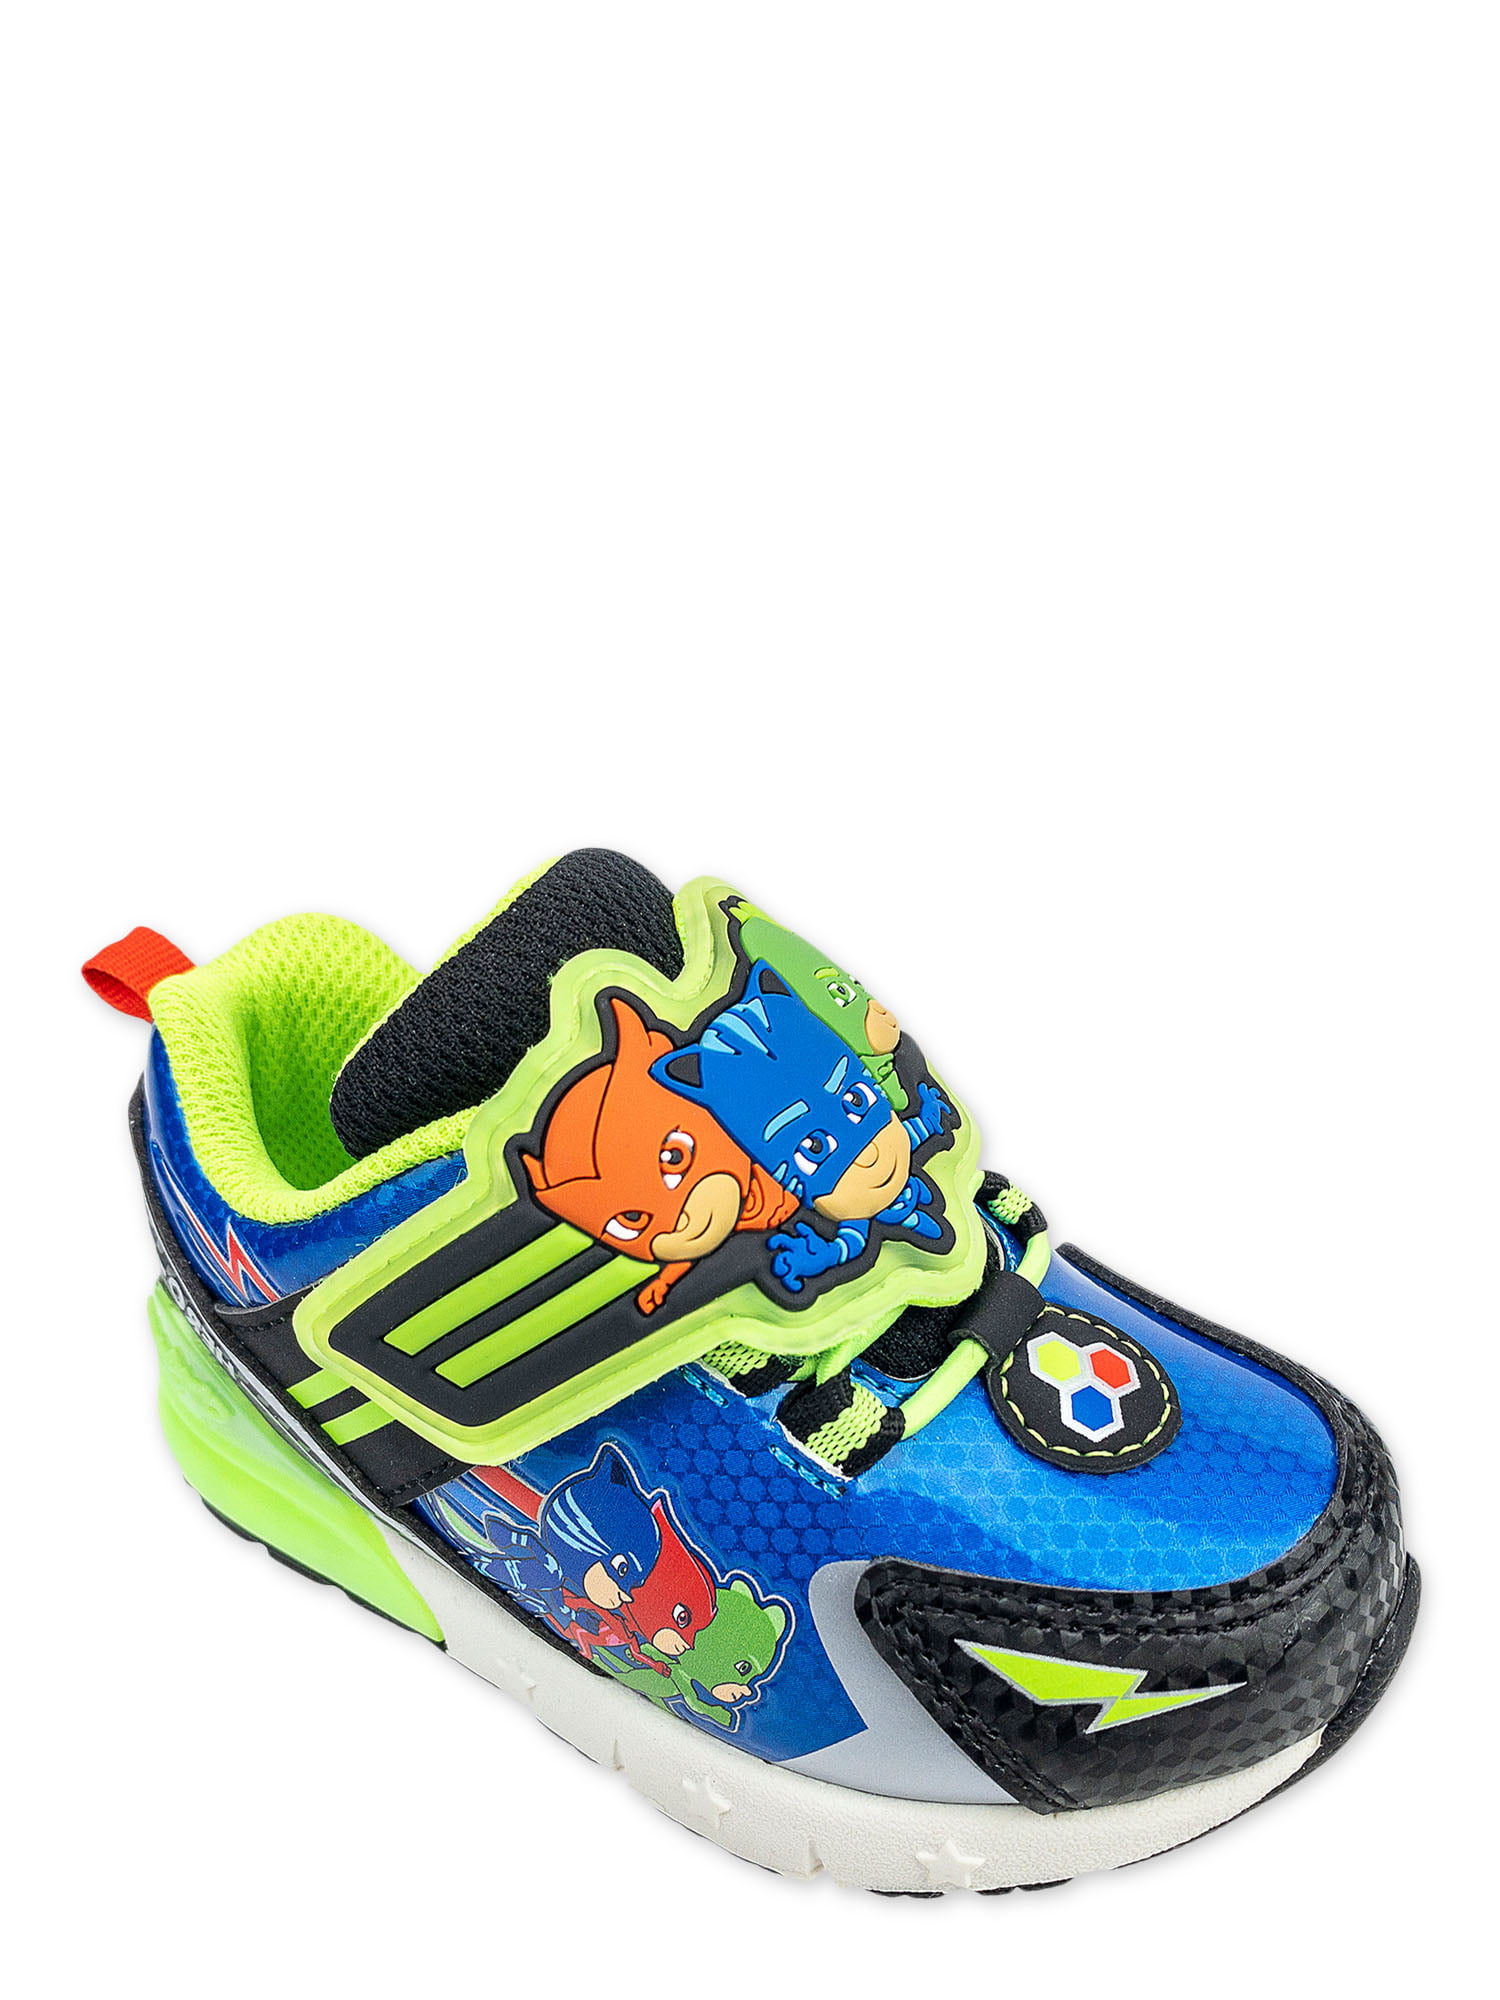 Boys P J Masks Blue Sports Beach Sandals Walking Shoes Hook & Loop Sizes UK 5-10 